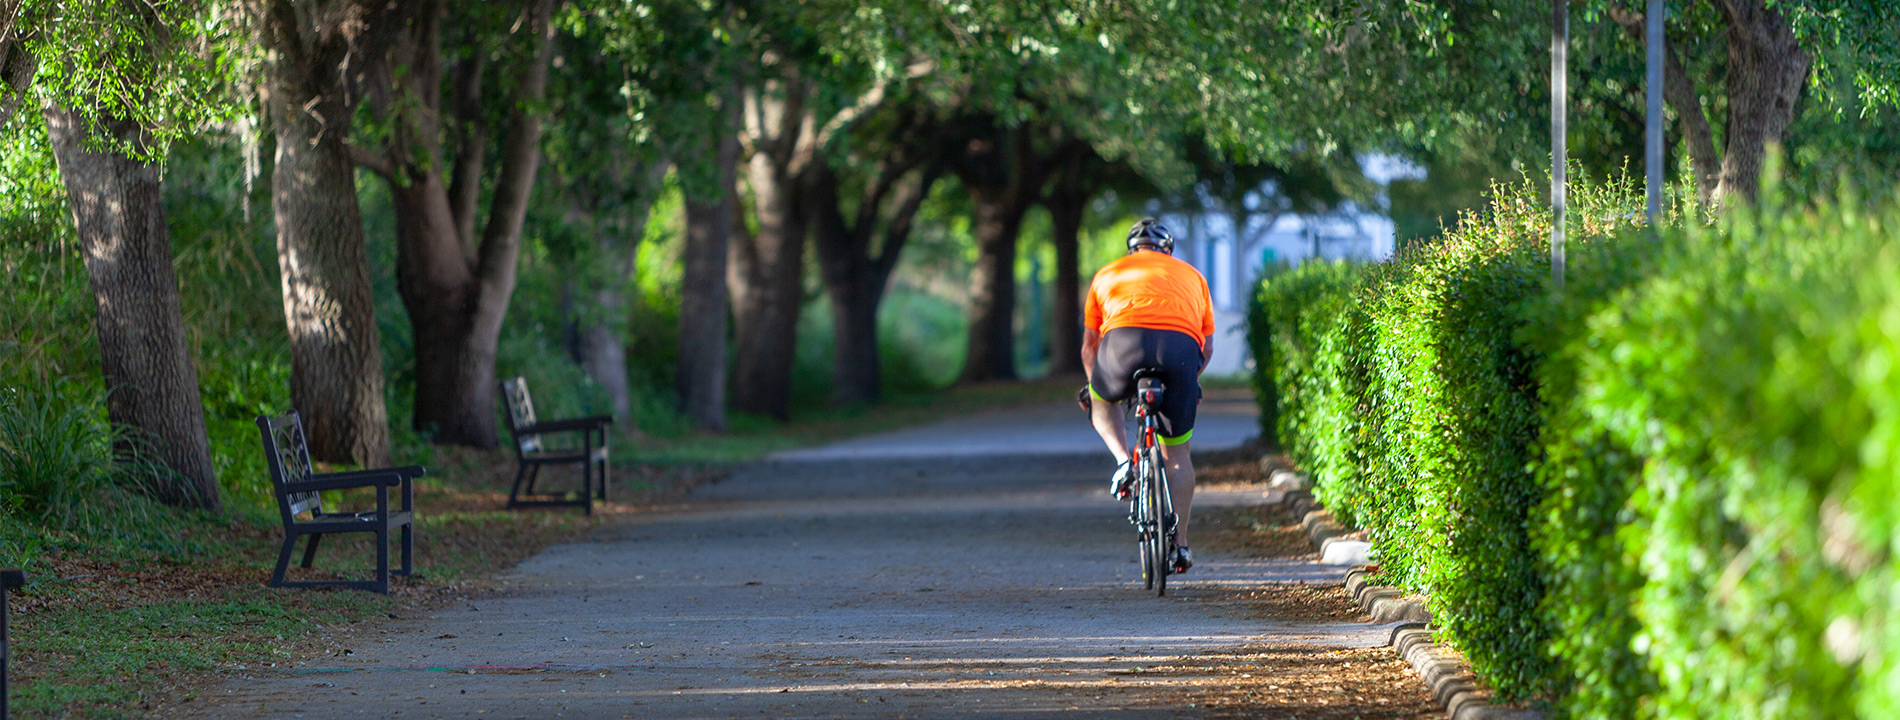 bike rider on pathway within park